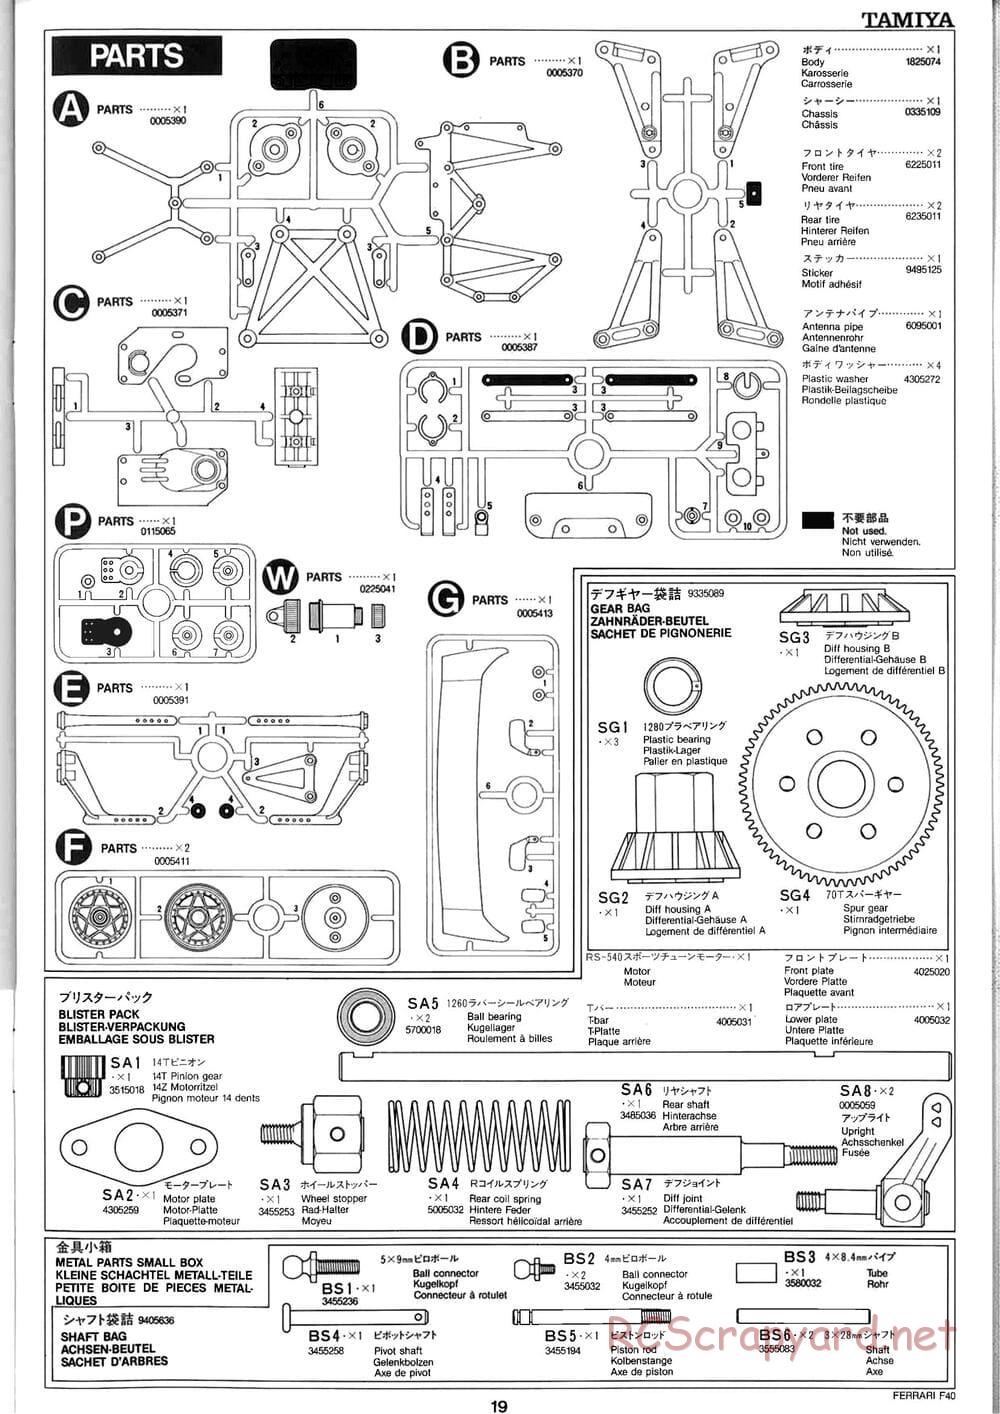 Tamiya - Ferrari F40 - Group-C Chassis - Manual - Page 19